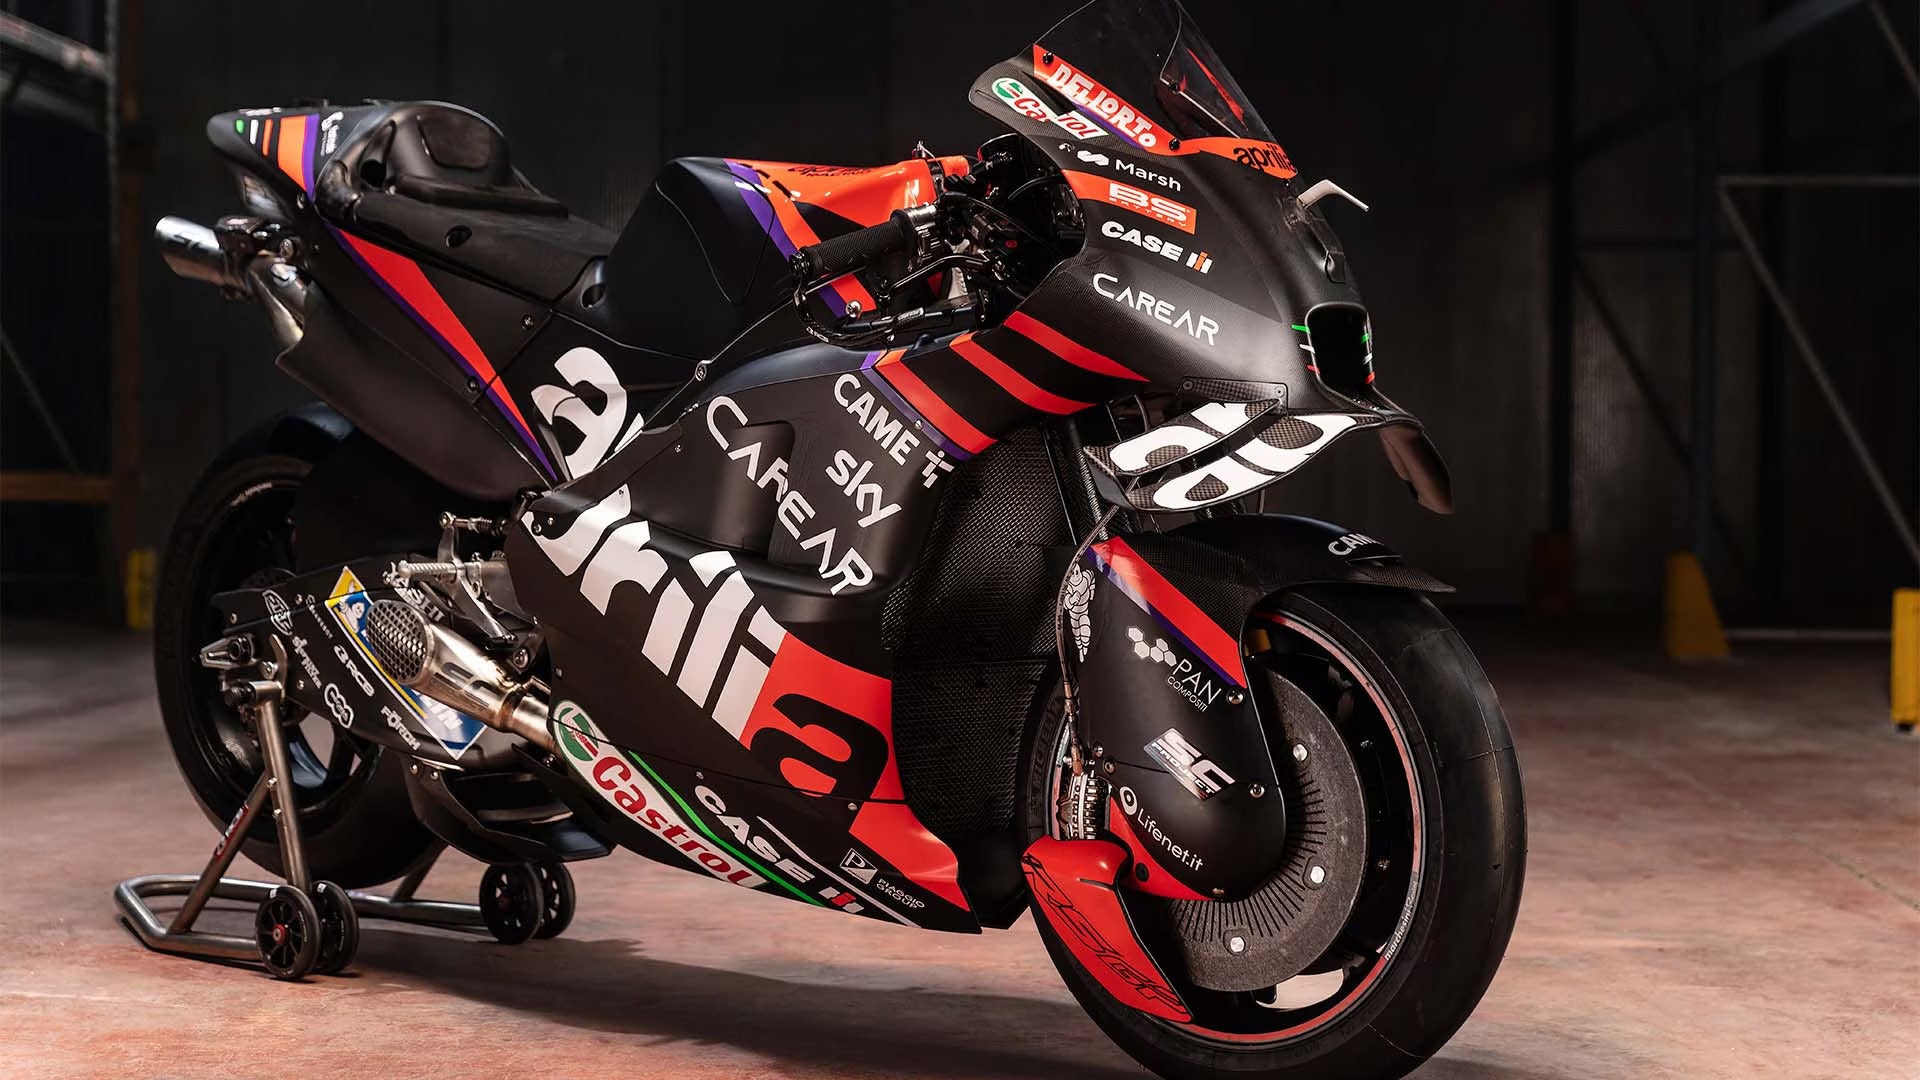 MotoGP Team Aprilia have unveiled their 2023 livery for their RS-GP23